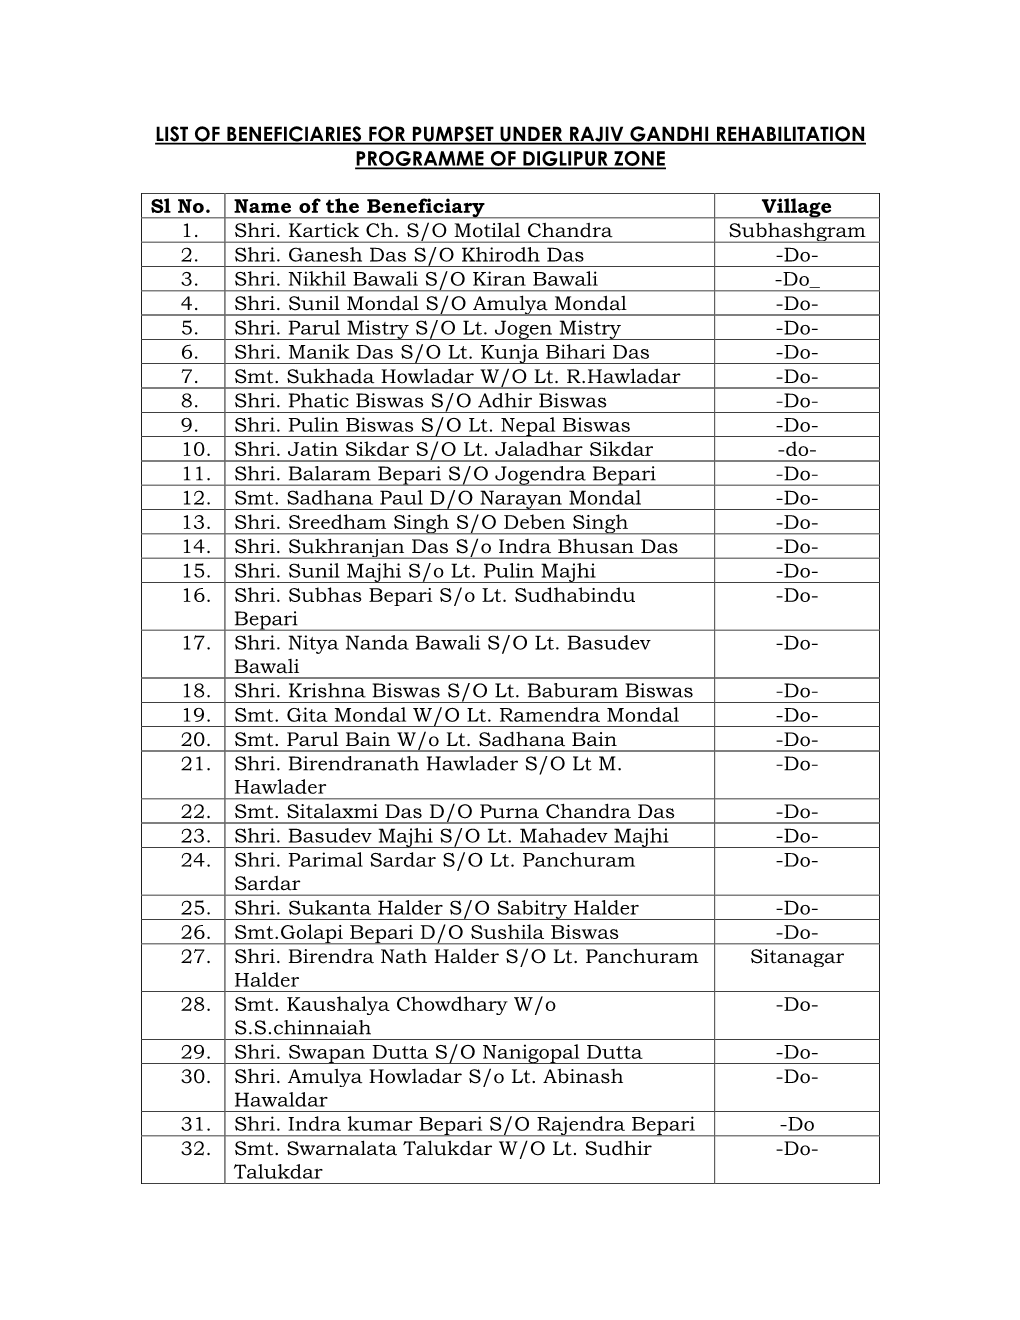 List of Beneficiaries for Pumpset Under Rajiv Gandhi Rehabilitation Programme of Diglipur Zone